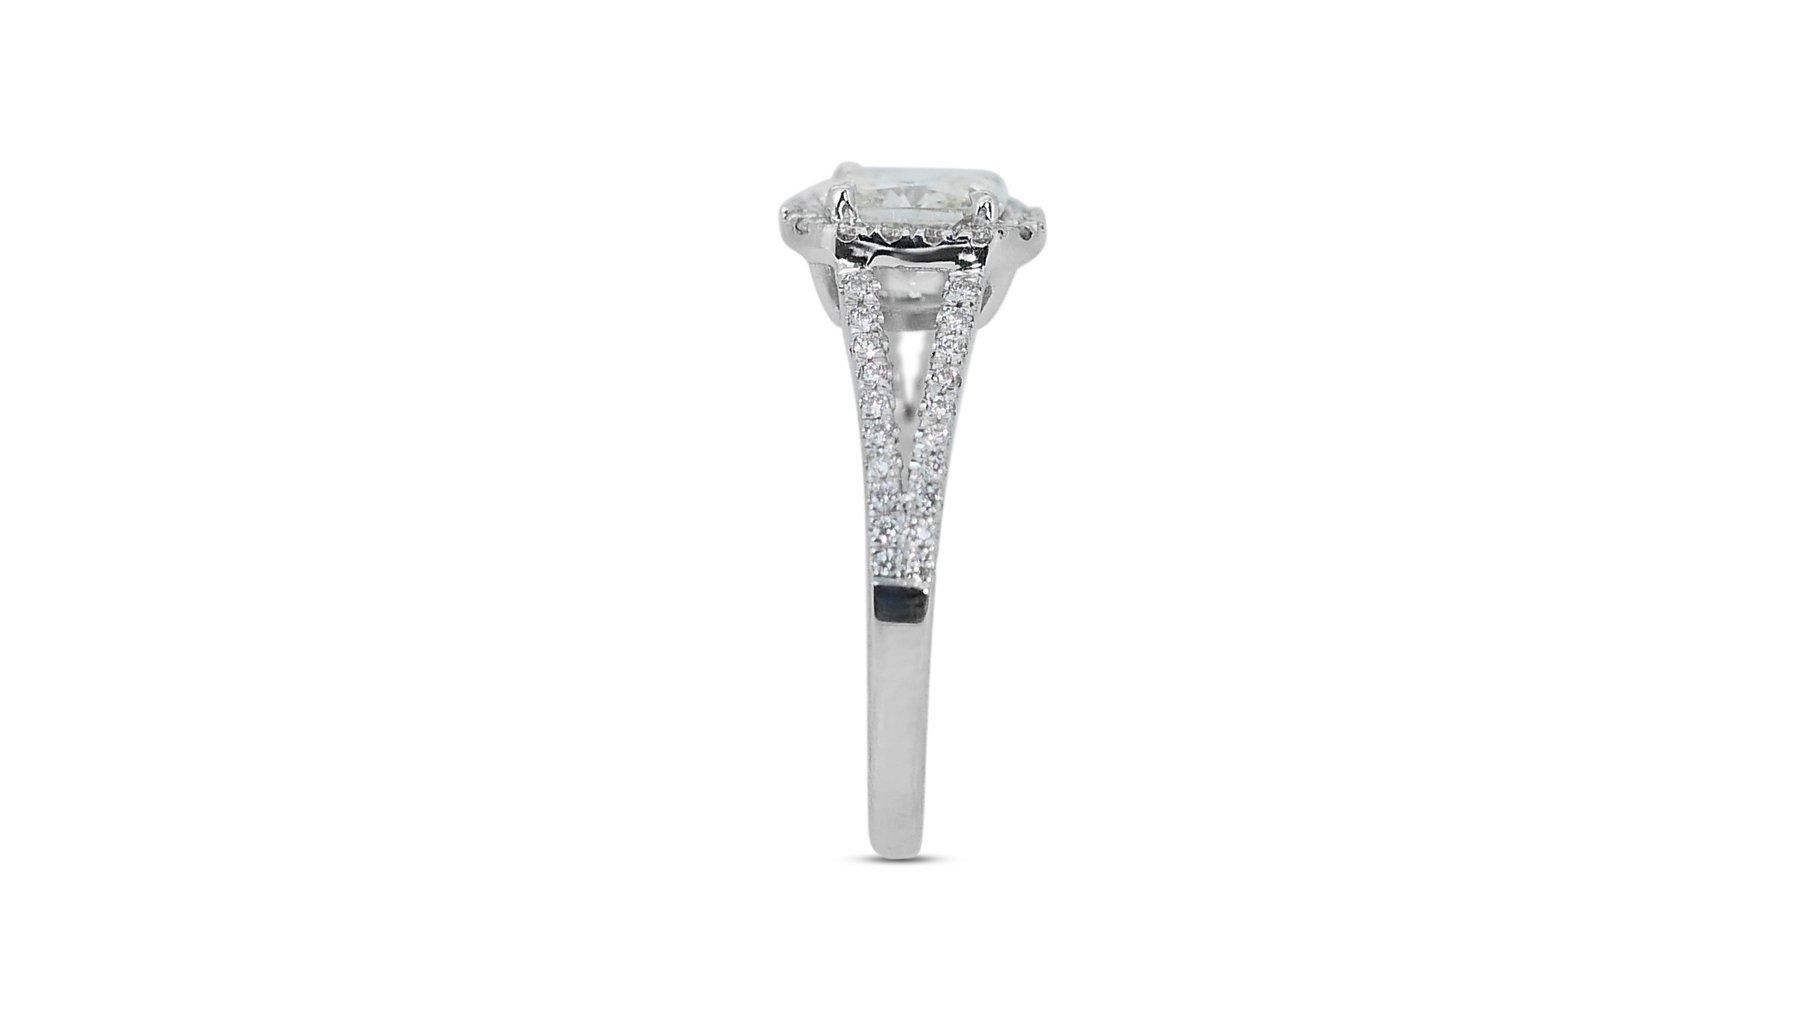 Captivating Ring features a Dazzling 1.01 carat cushion cut Natural Diamond 4